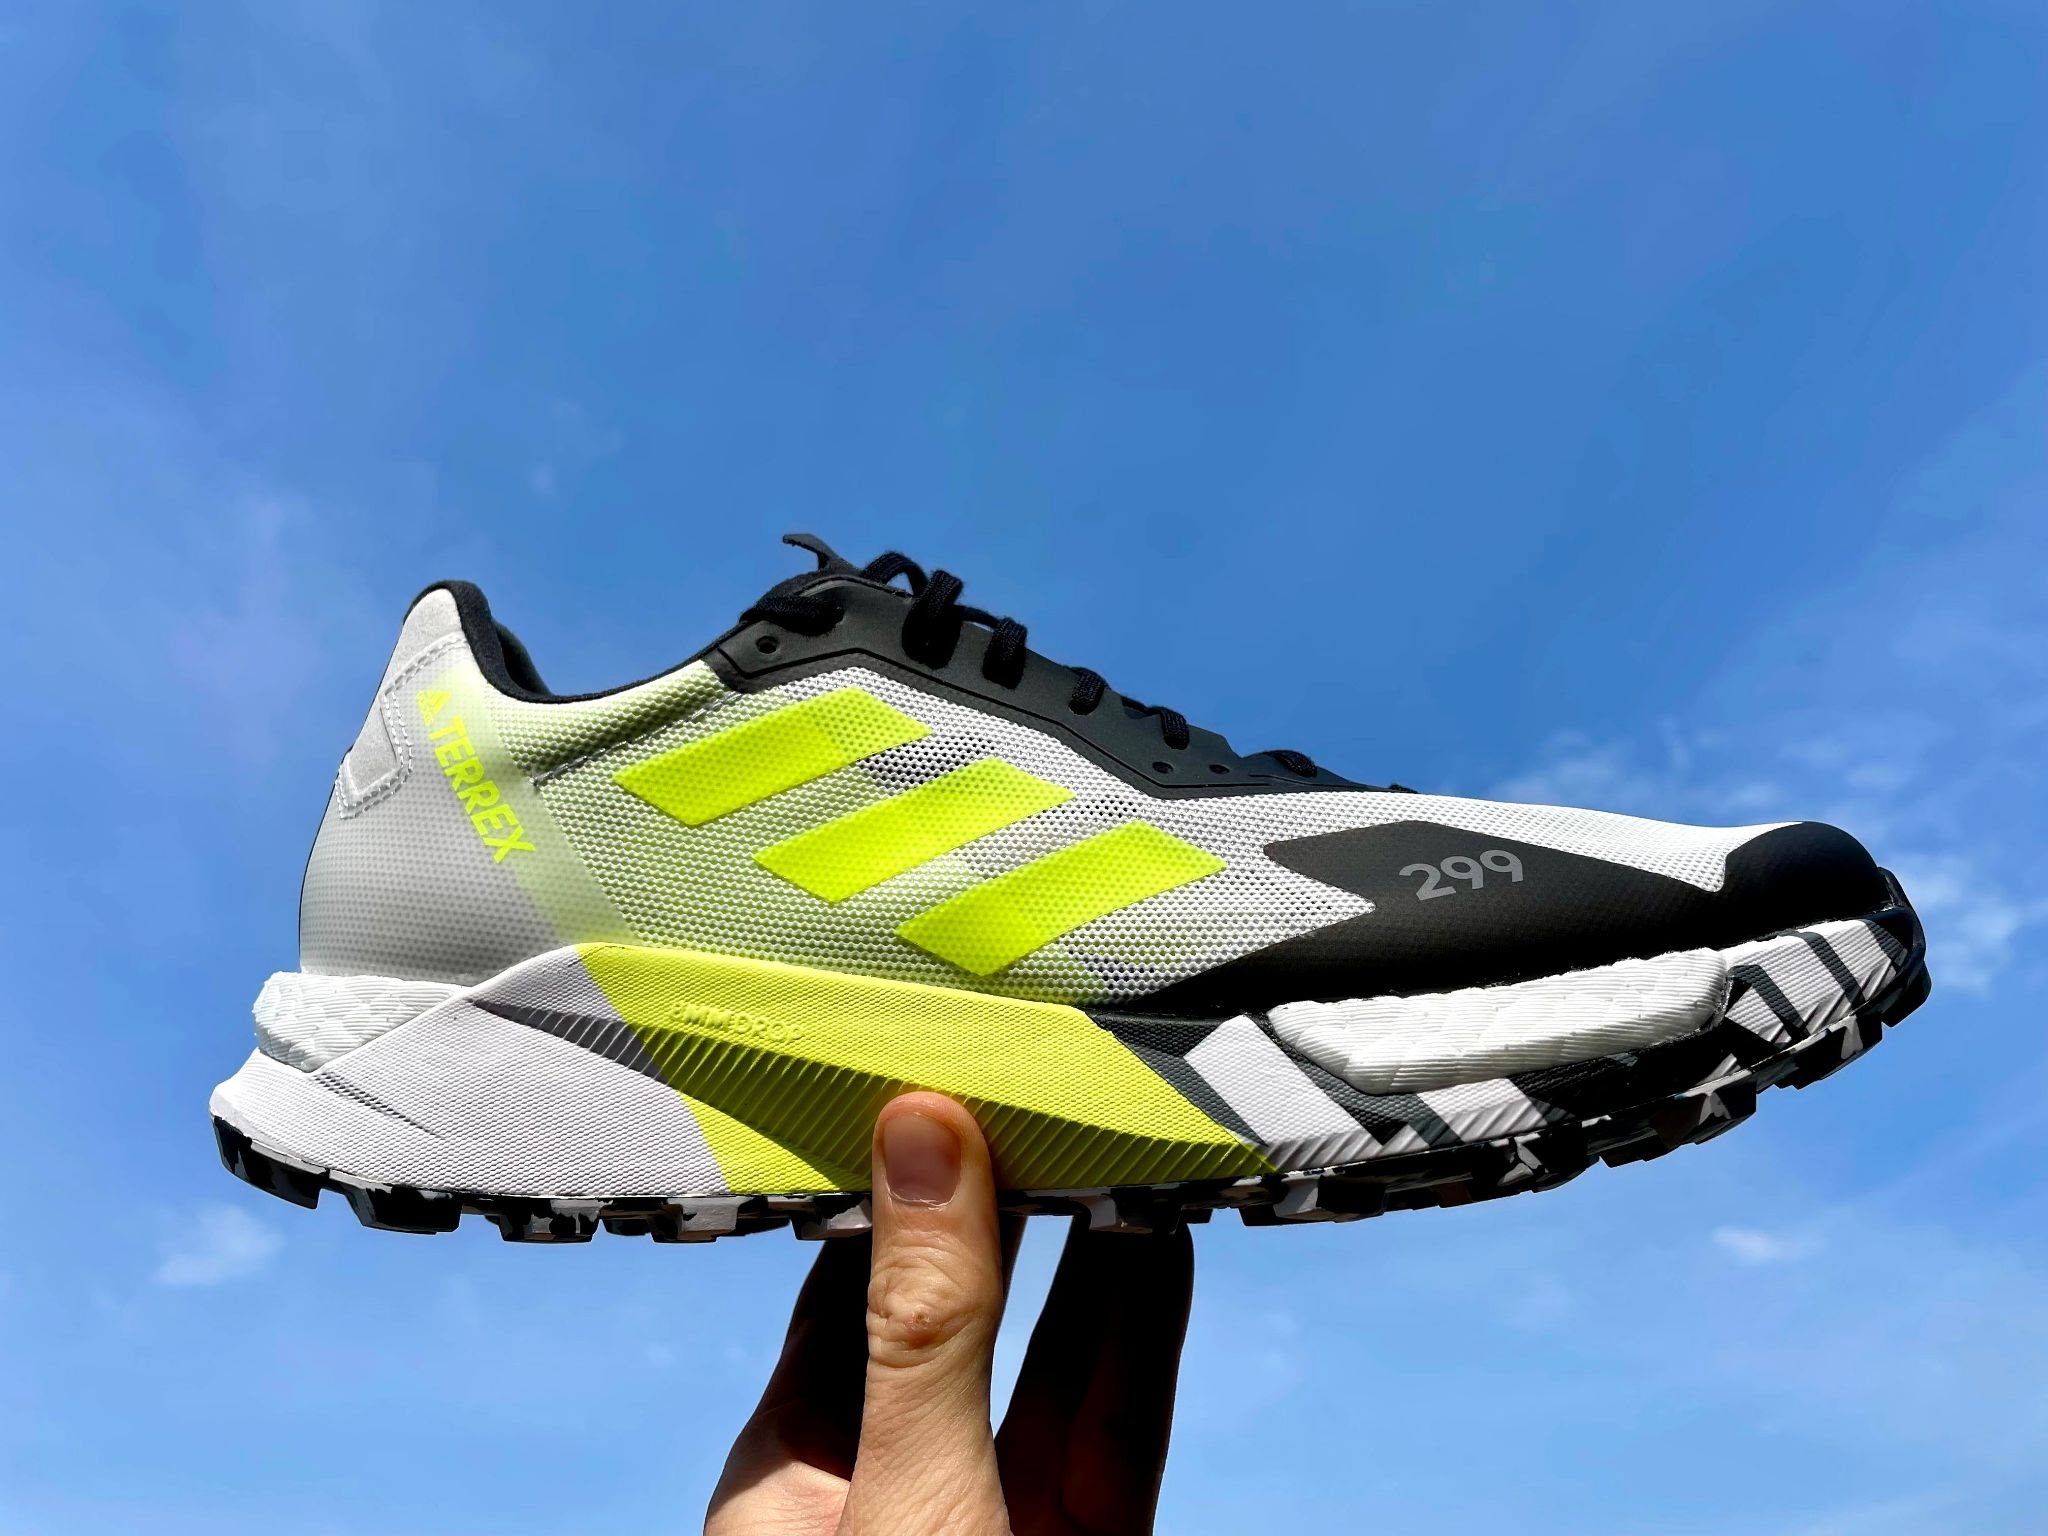 Adidas Terrex Agravic Ultra